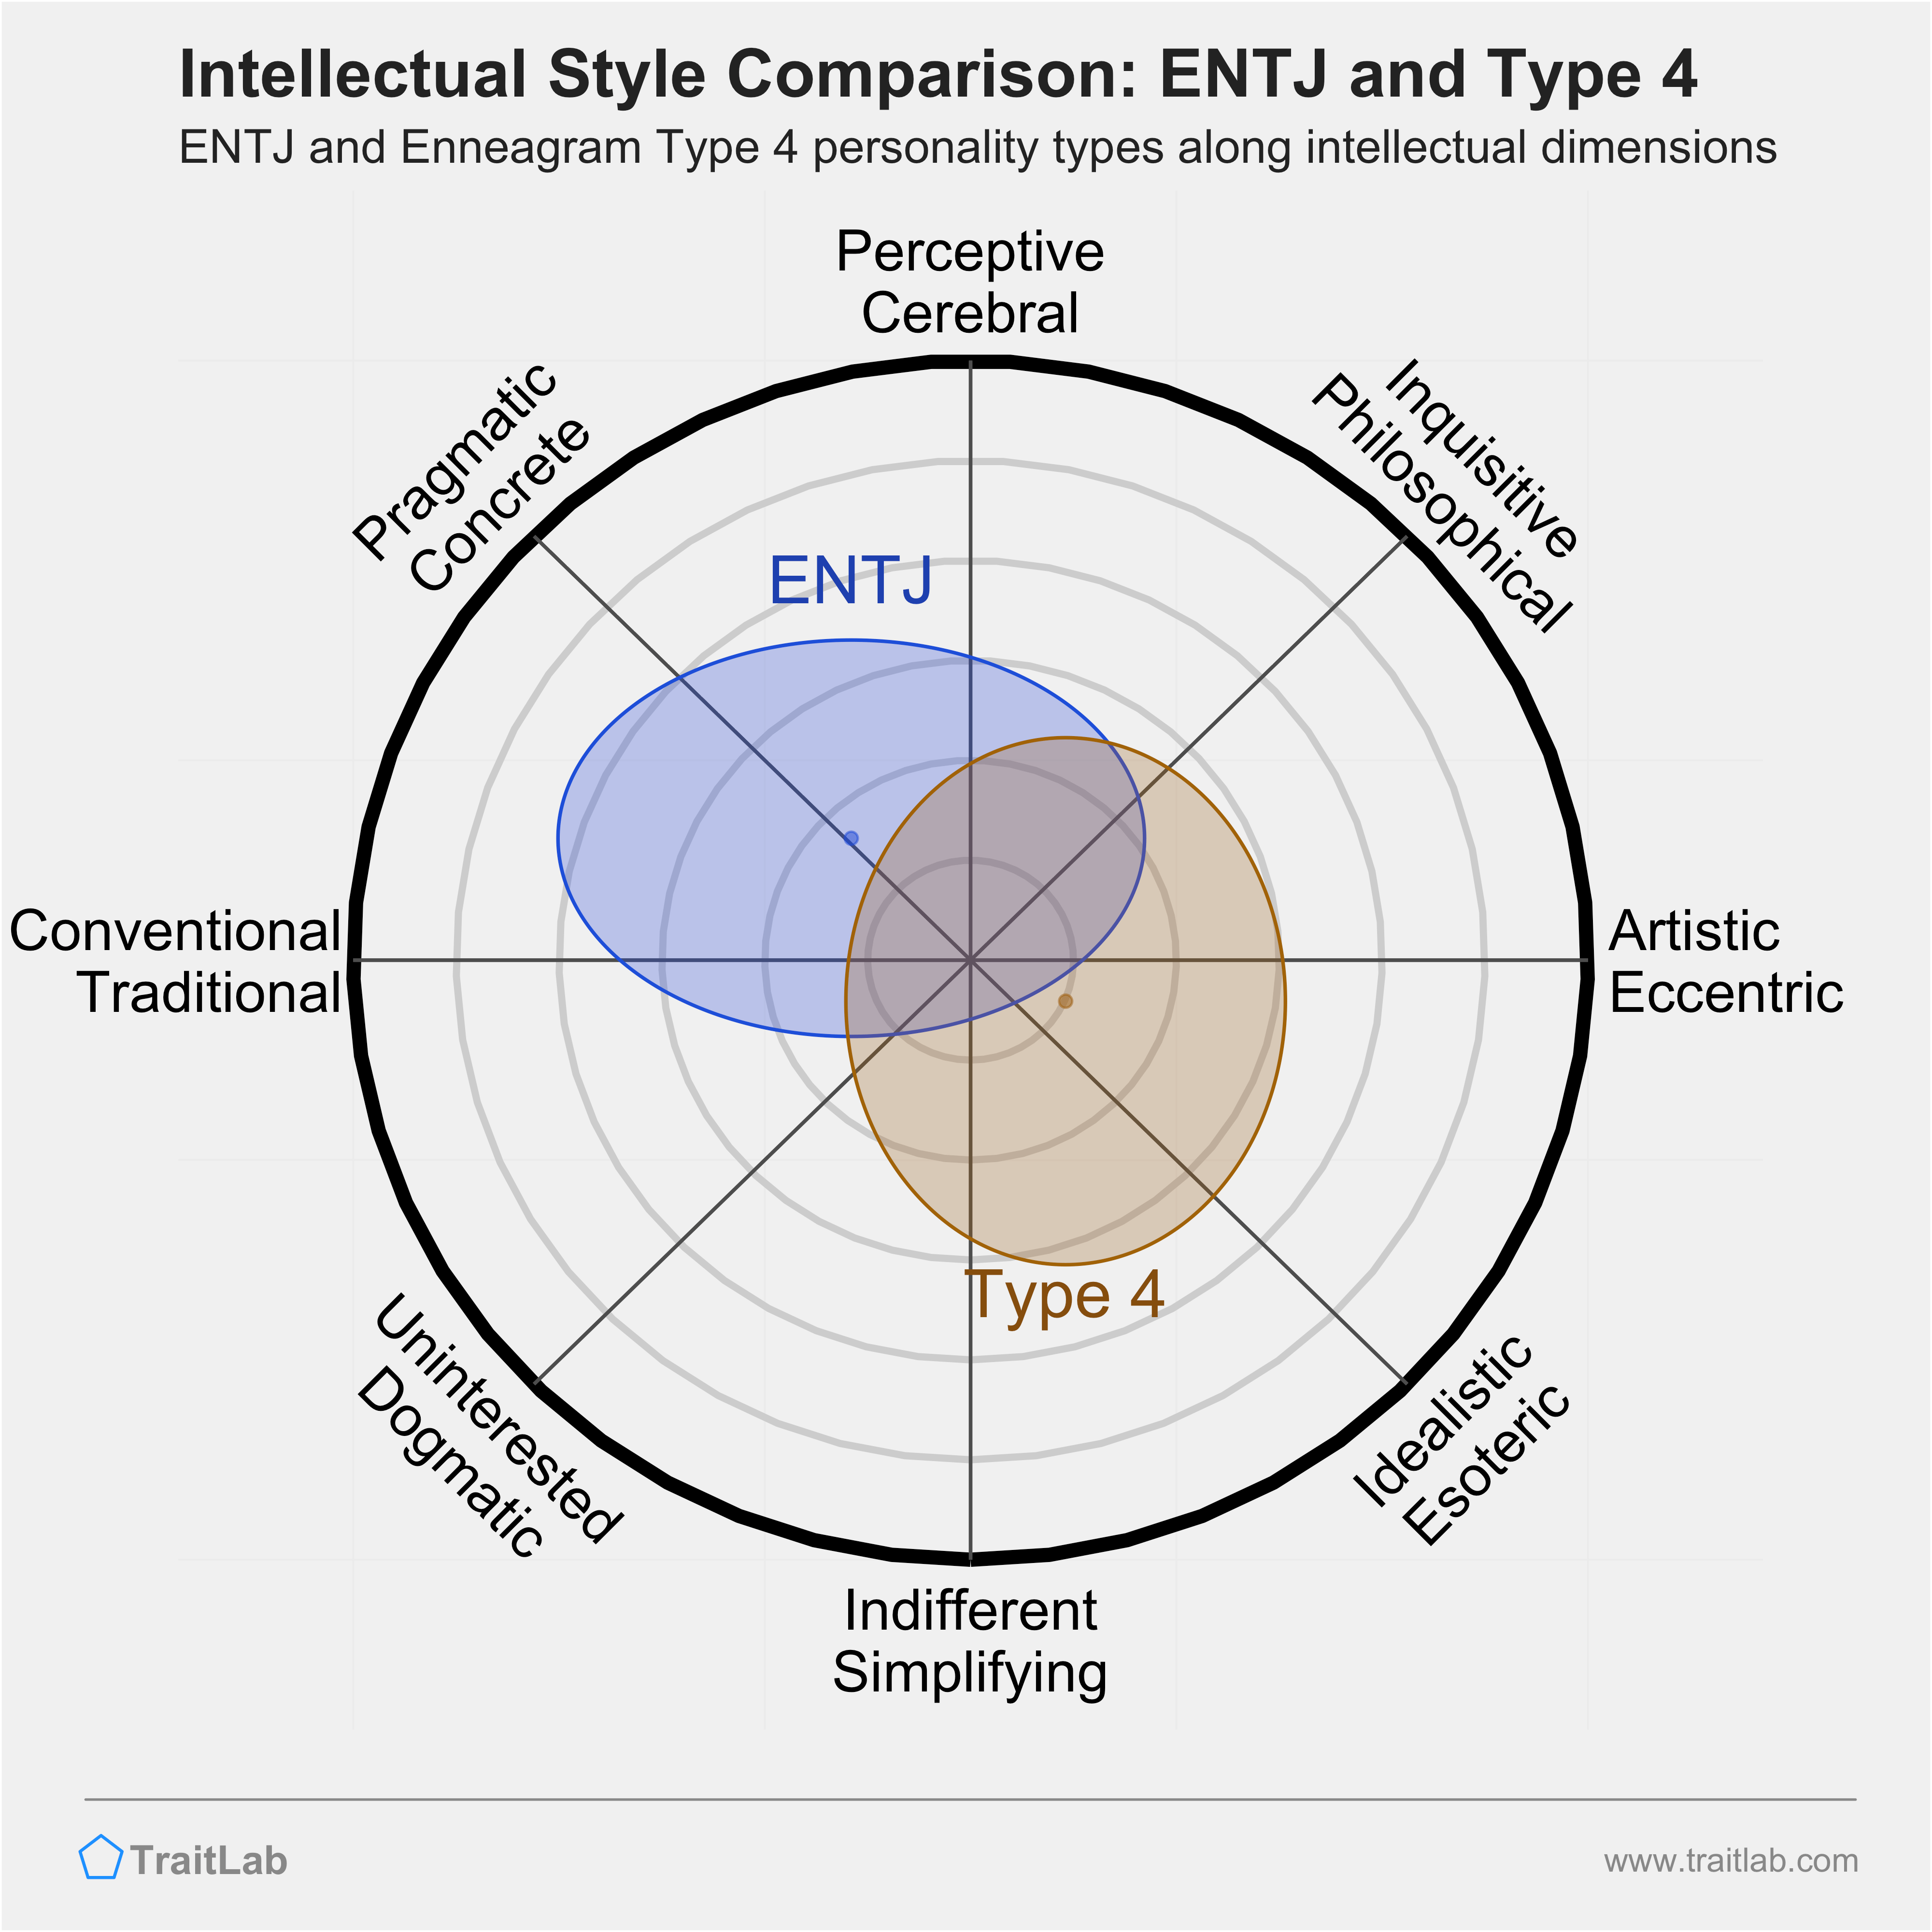 ENTJ and Type 4 comparison across intellectual dimensions